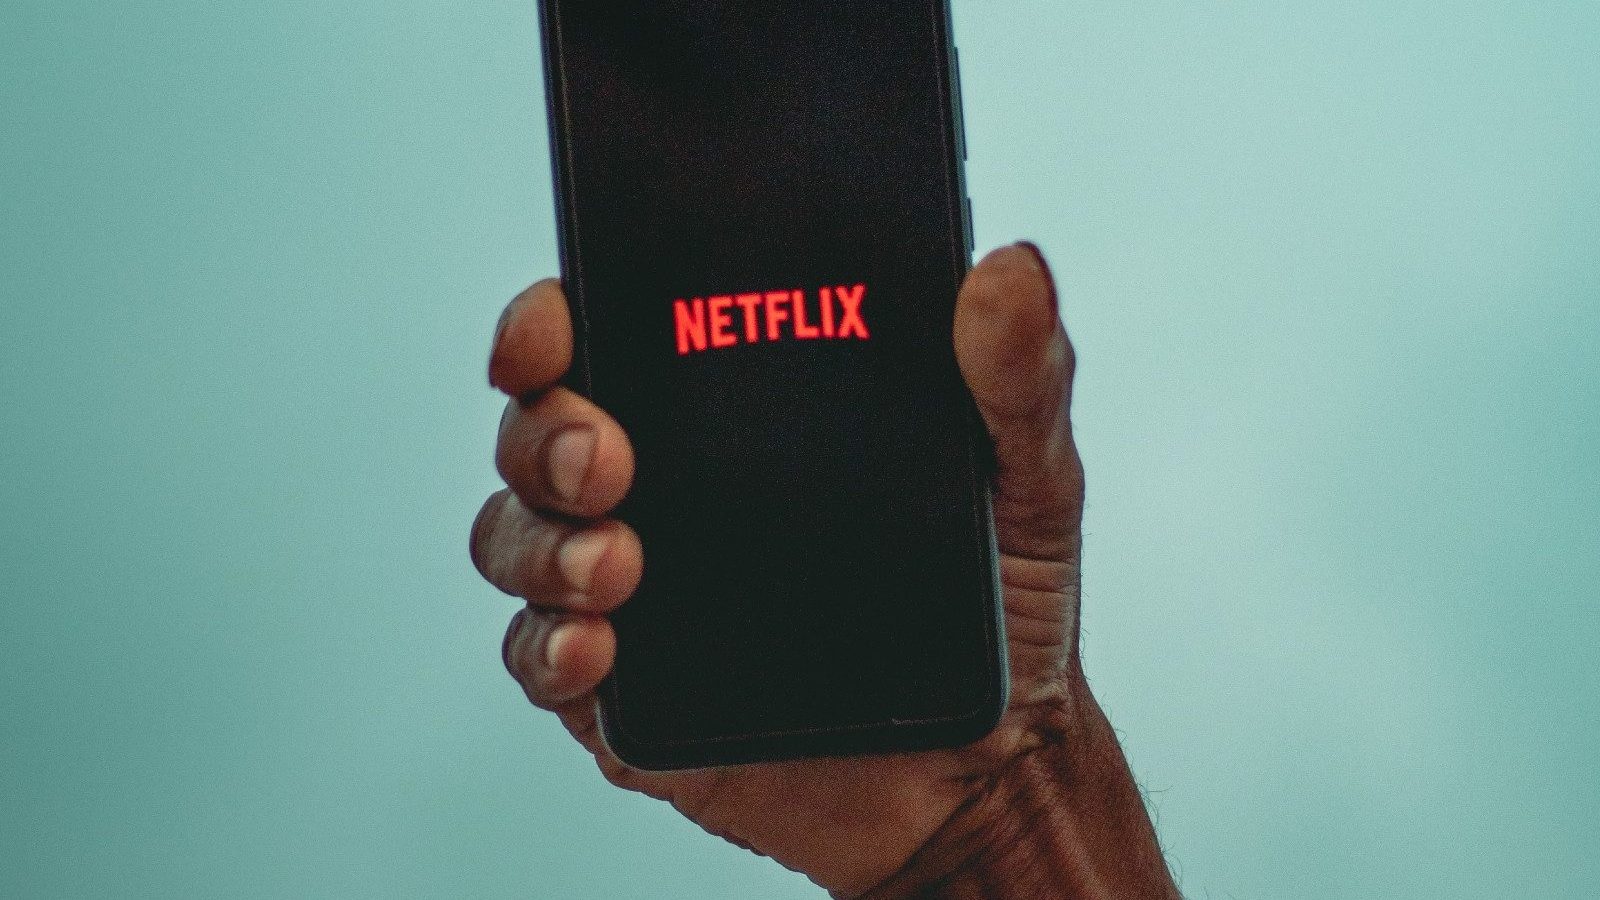 Netflix ইউজারদের মাথায় হাত, আর পাসওয়ার্ড শেয়ার করে দেখা যাবে না শো